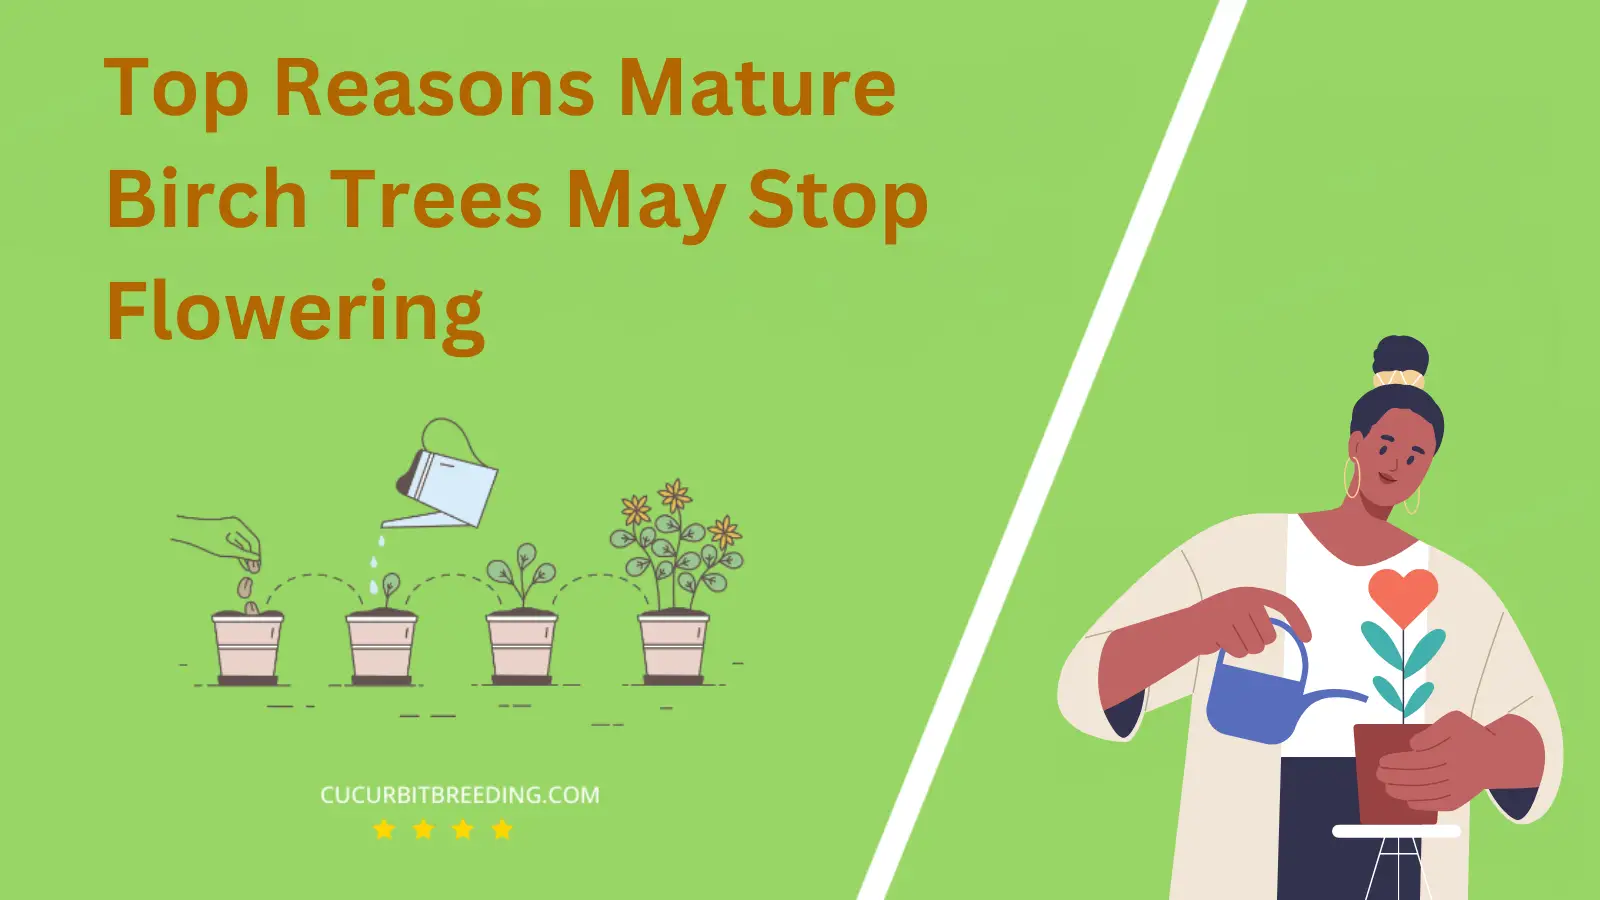 Top Reasons Mature Birch Trees May Stop Flowering